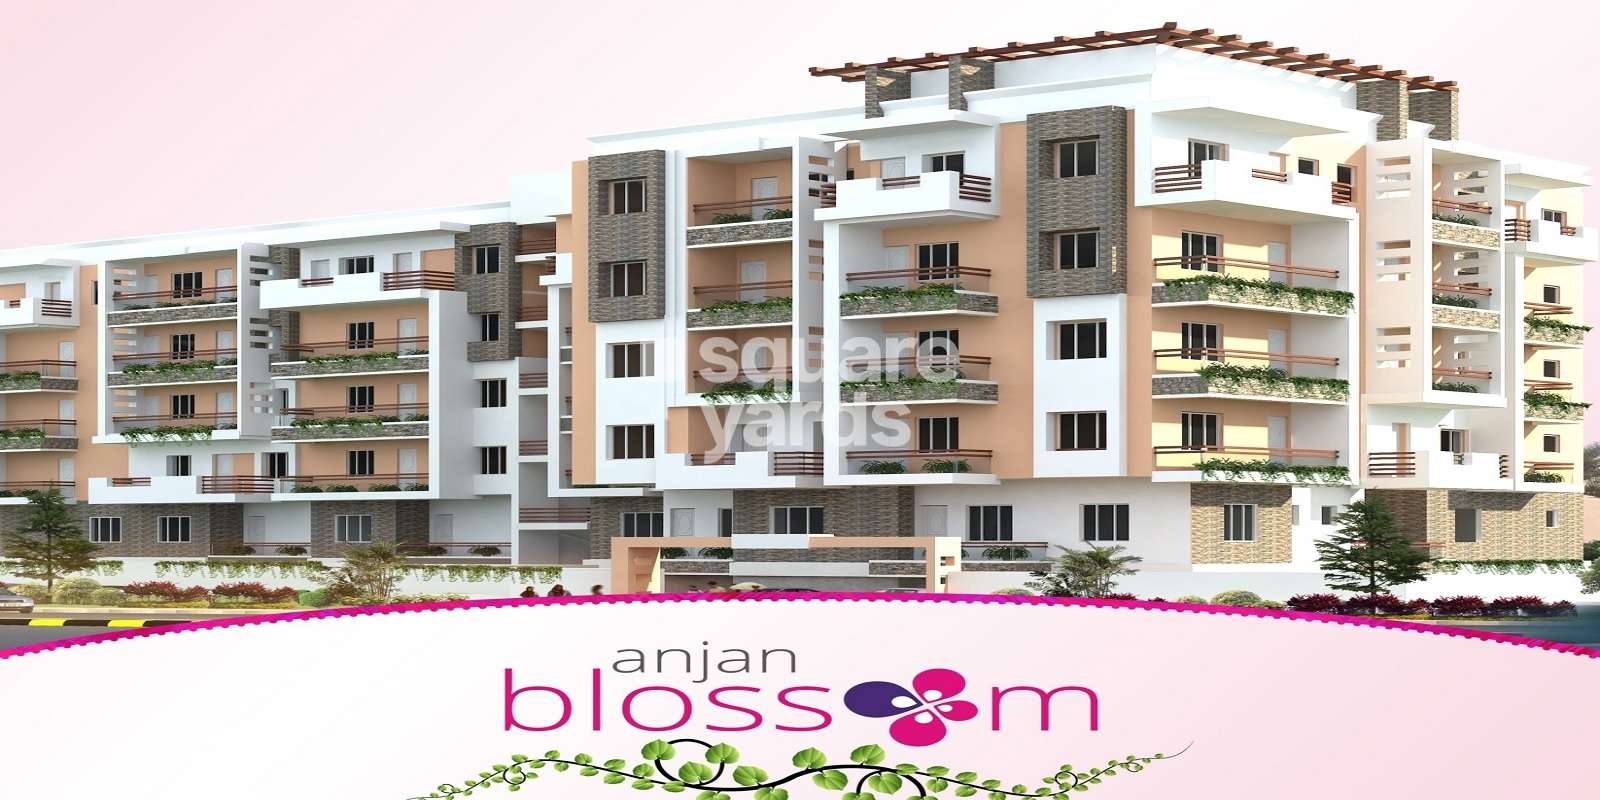 Anjan Blossom Cover Image